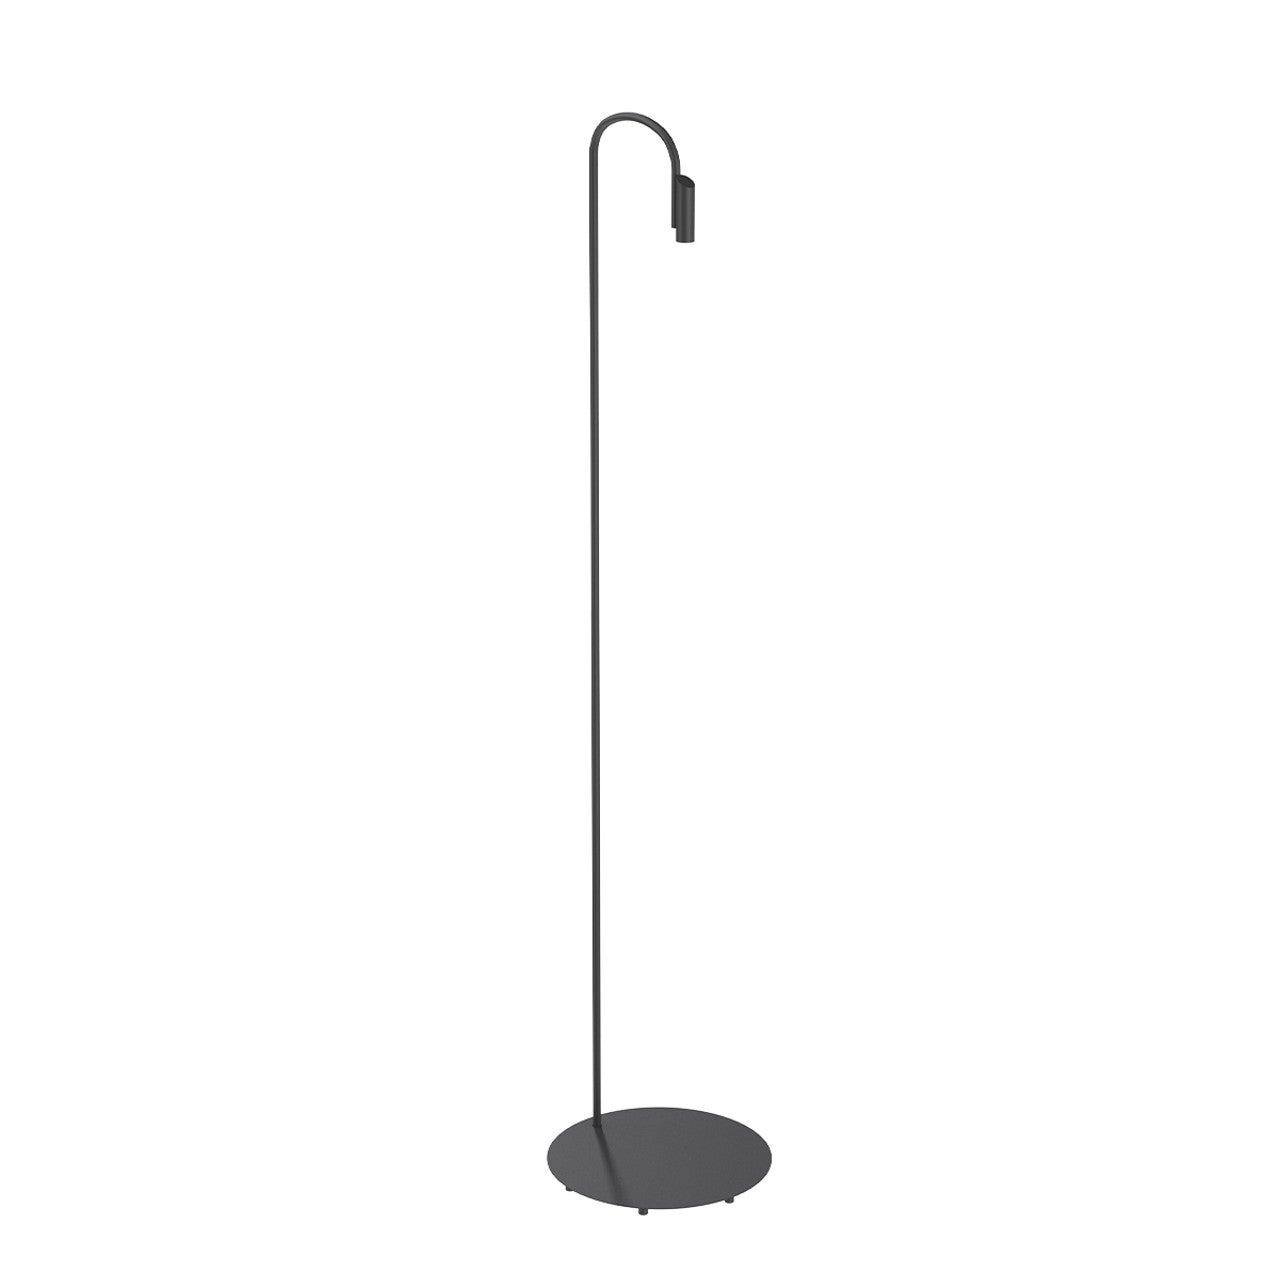 Flos Caule 3000K Model 5 Outdoor Floor Lamp in Black with Regular Shade For Sale